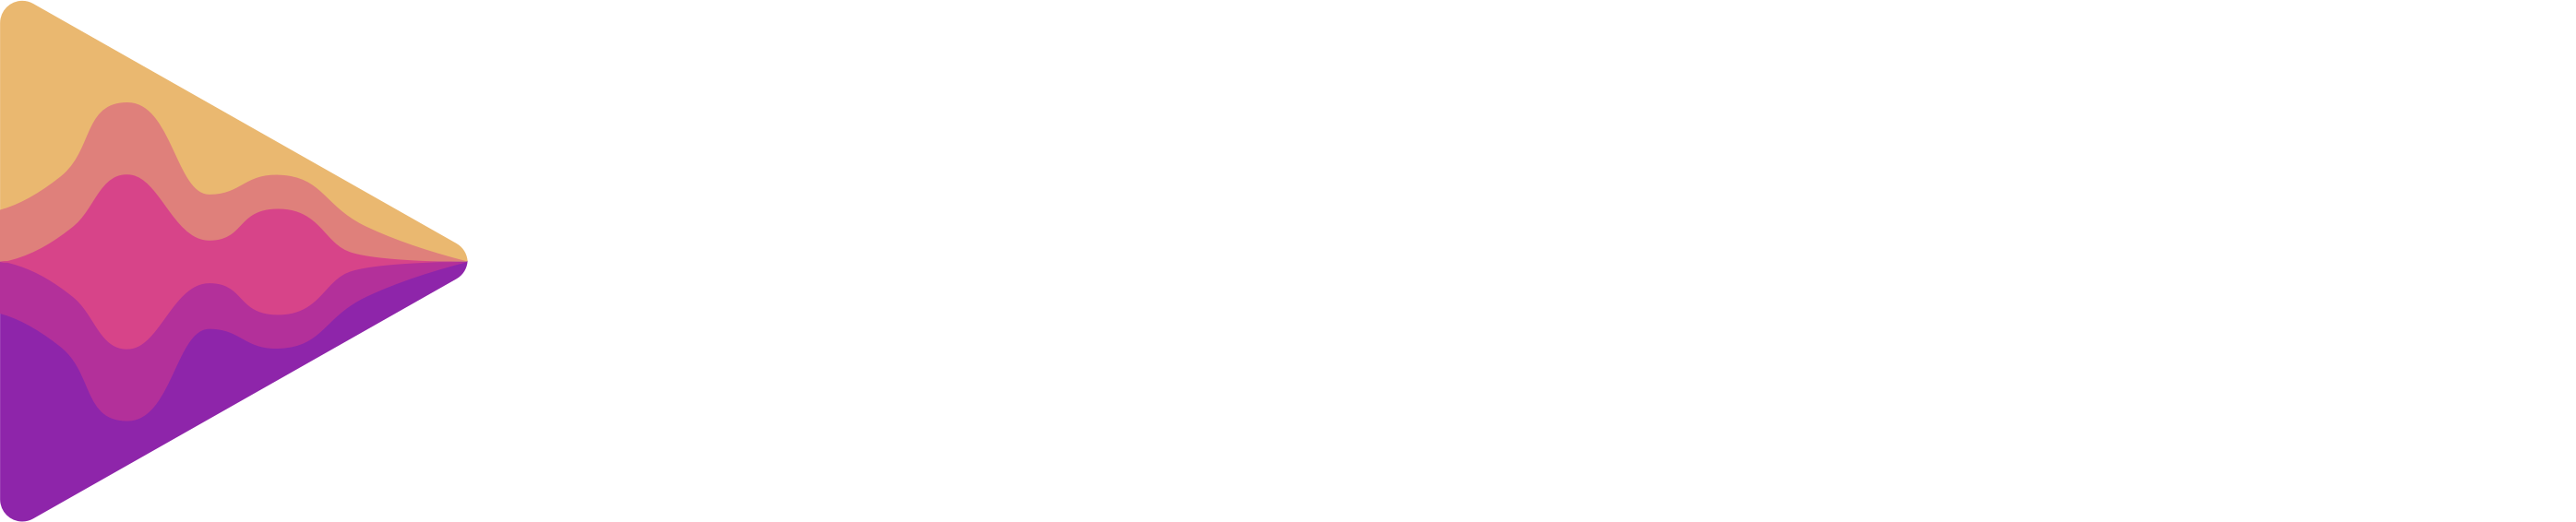 Sonation Logo